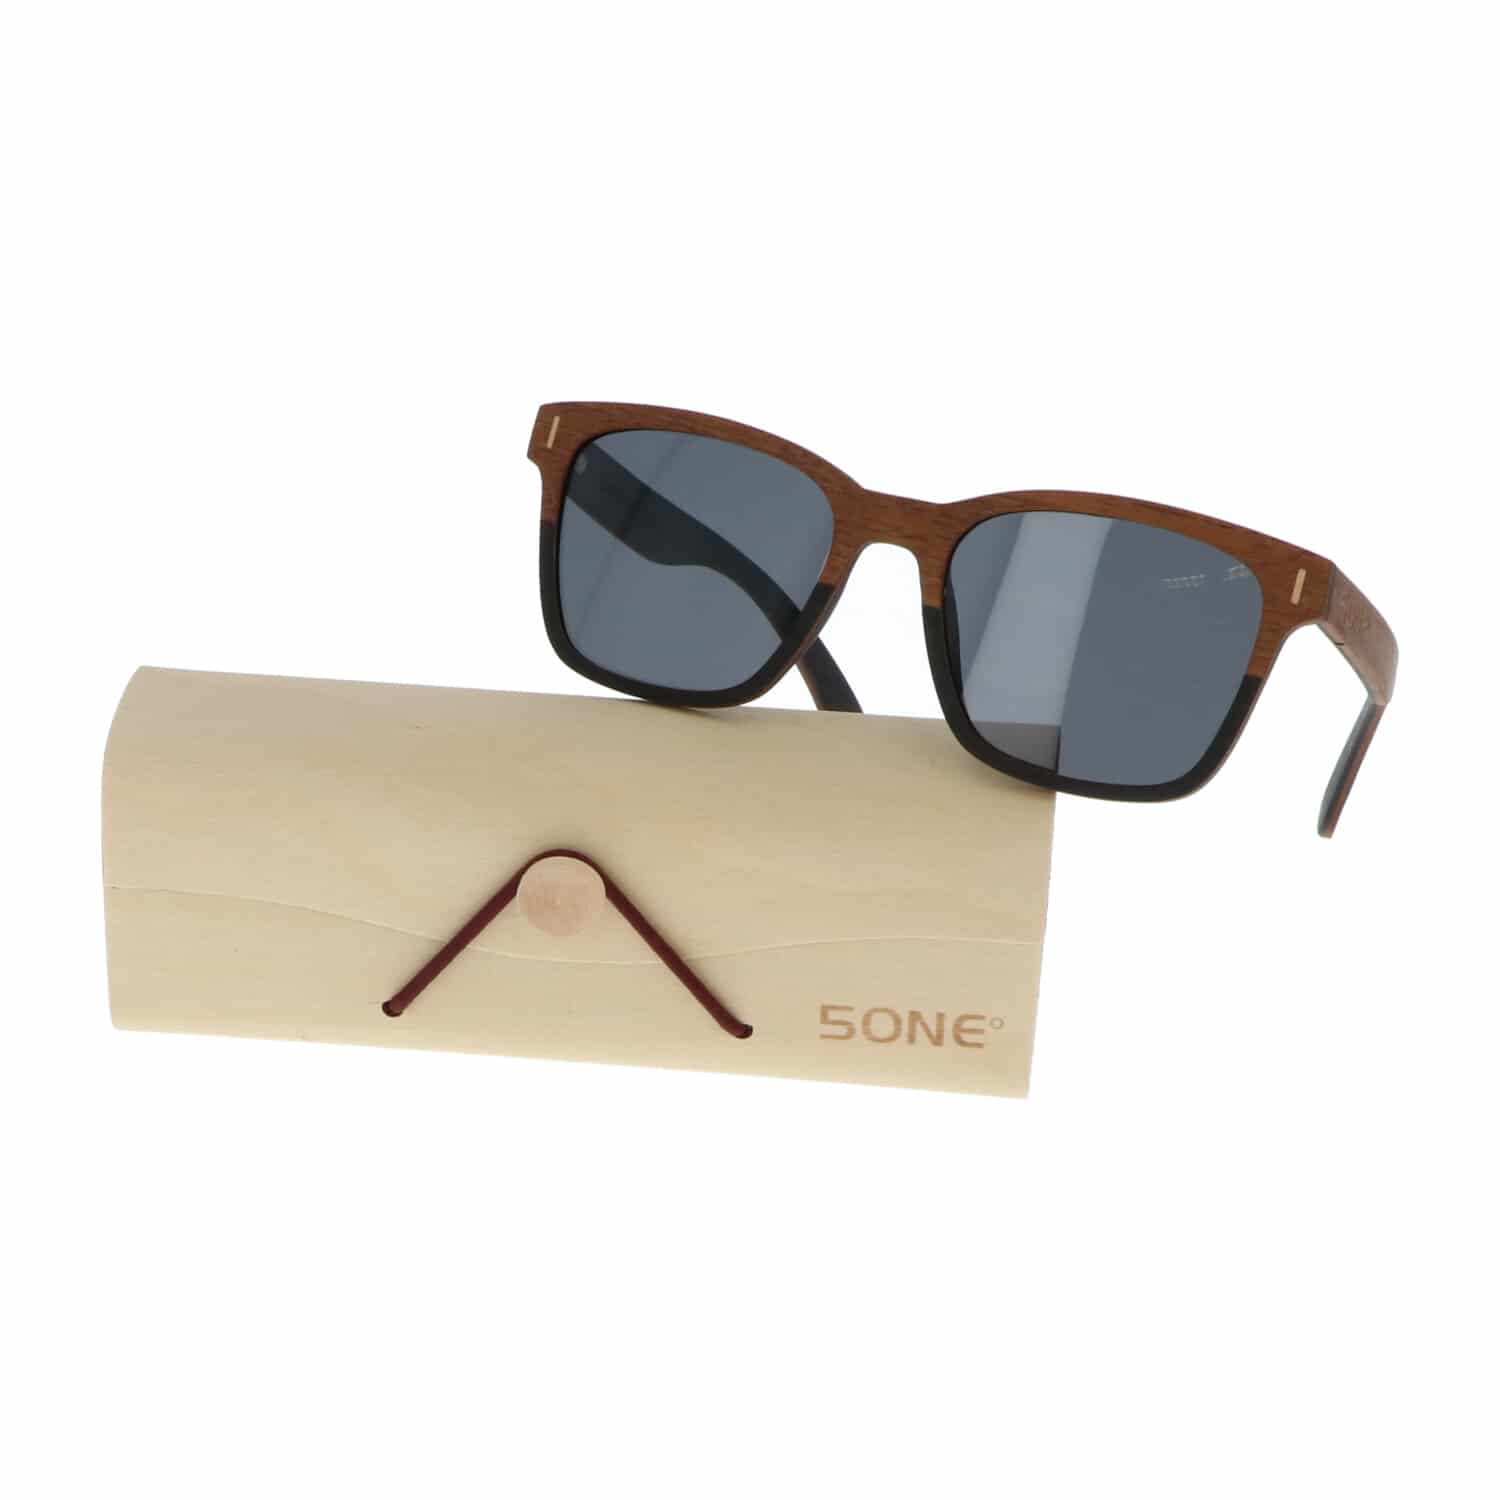 5one® Slim Line Walnut 2-tone - Walnoot hout Wayfarer zonnebril grijs